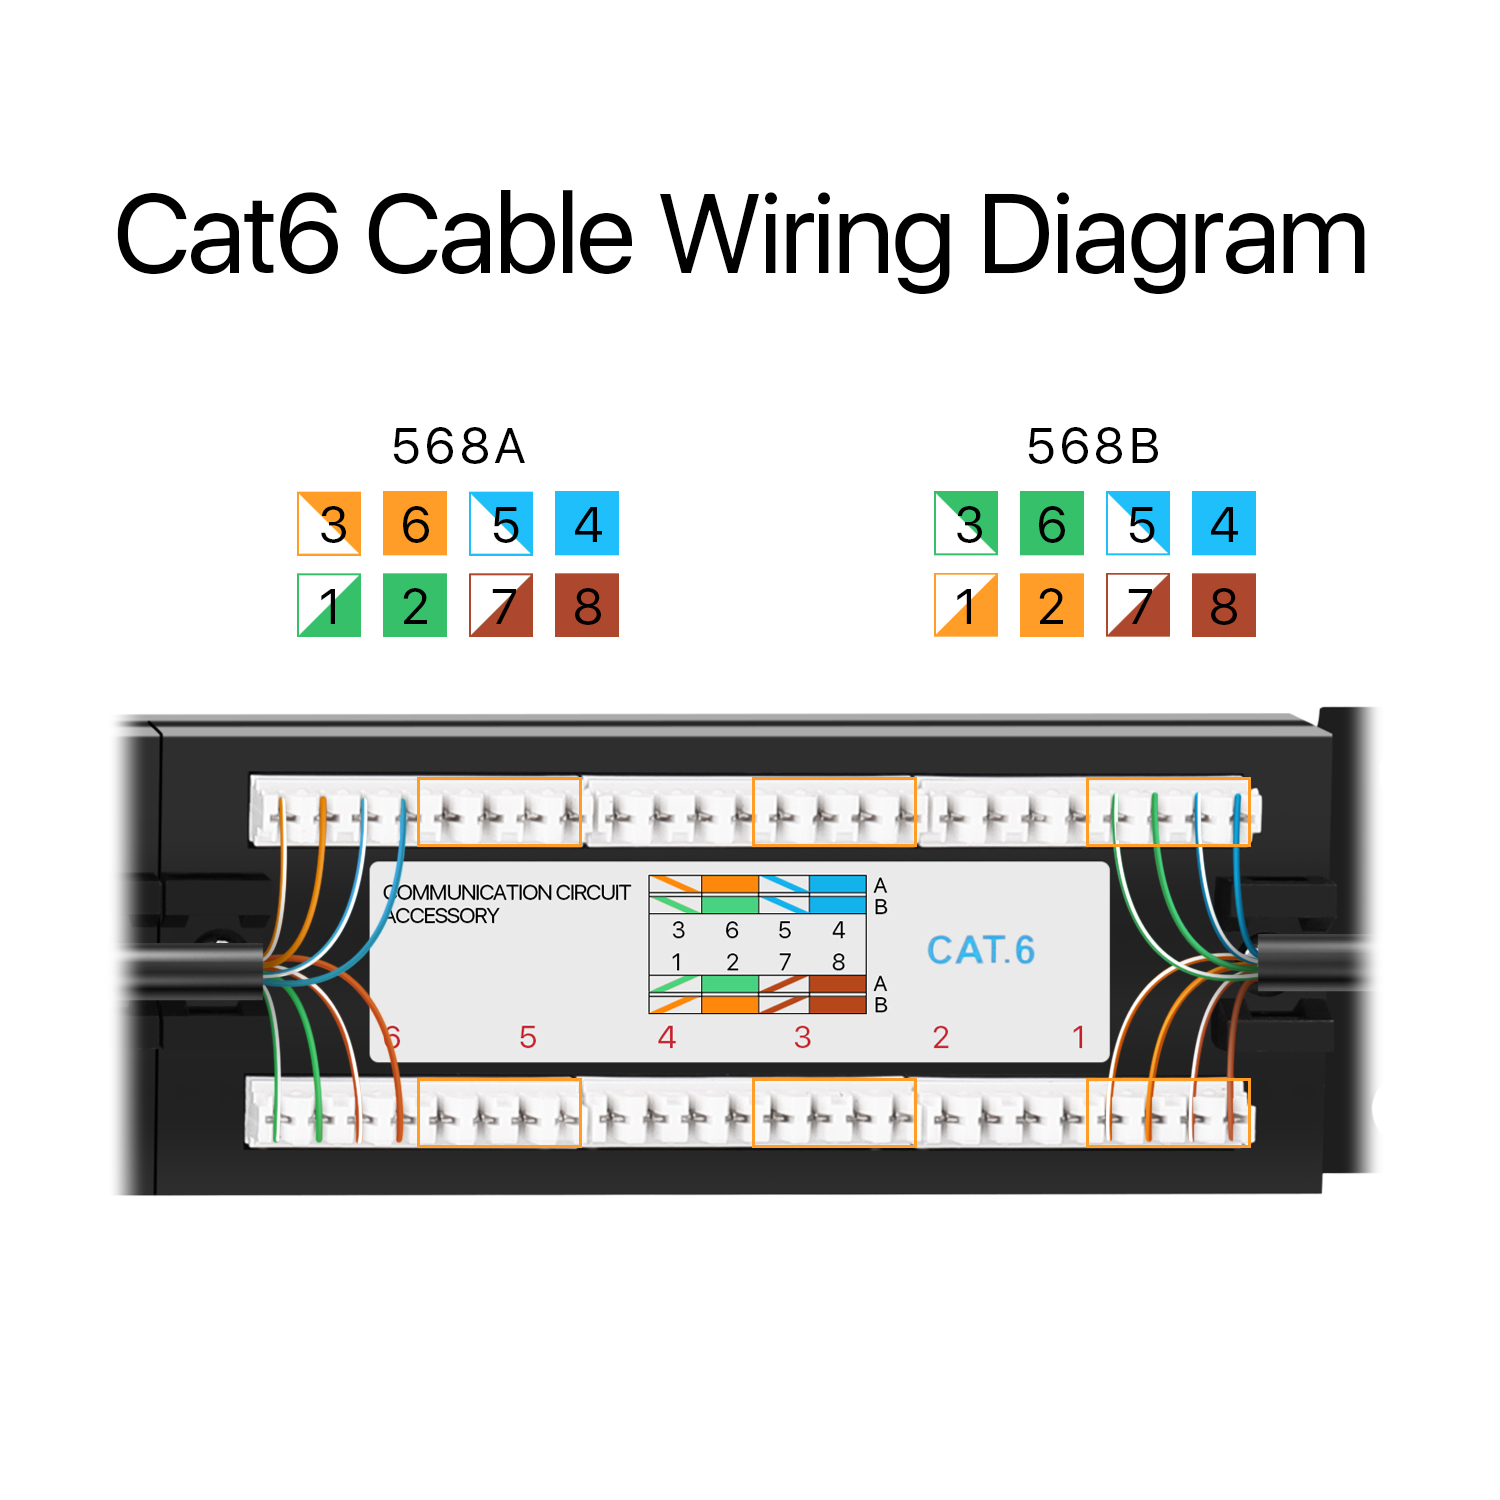 Ethernet Patch Panel Cat6 16 Port RJ45 Wall Mount Keystone Jack Network Cabling 843354104969 | eBay